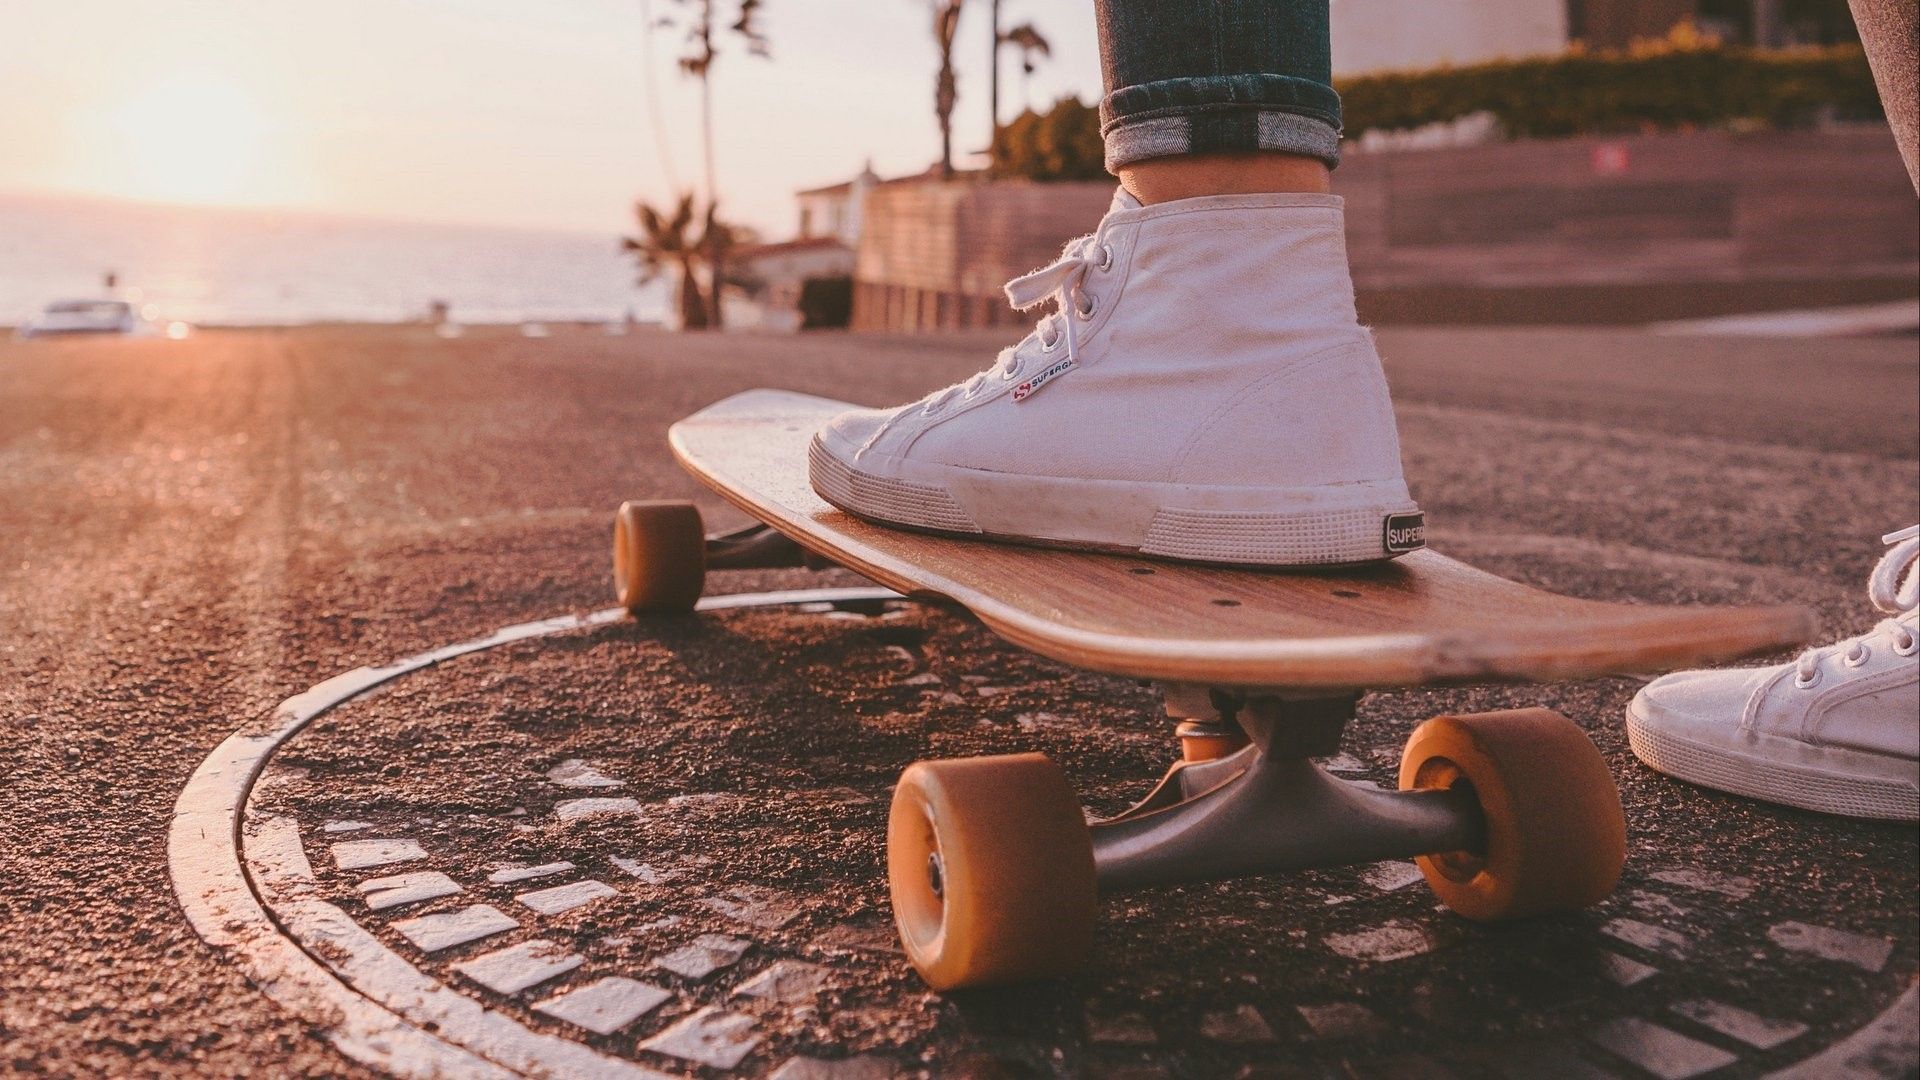 Skateboard Wallpapers: Free HD Download [500+ HQ]